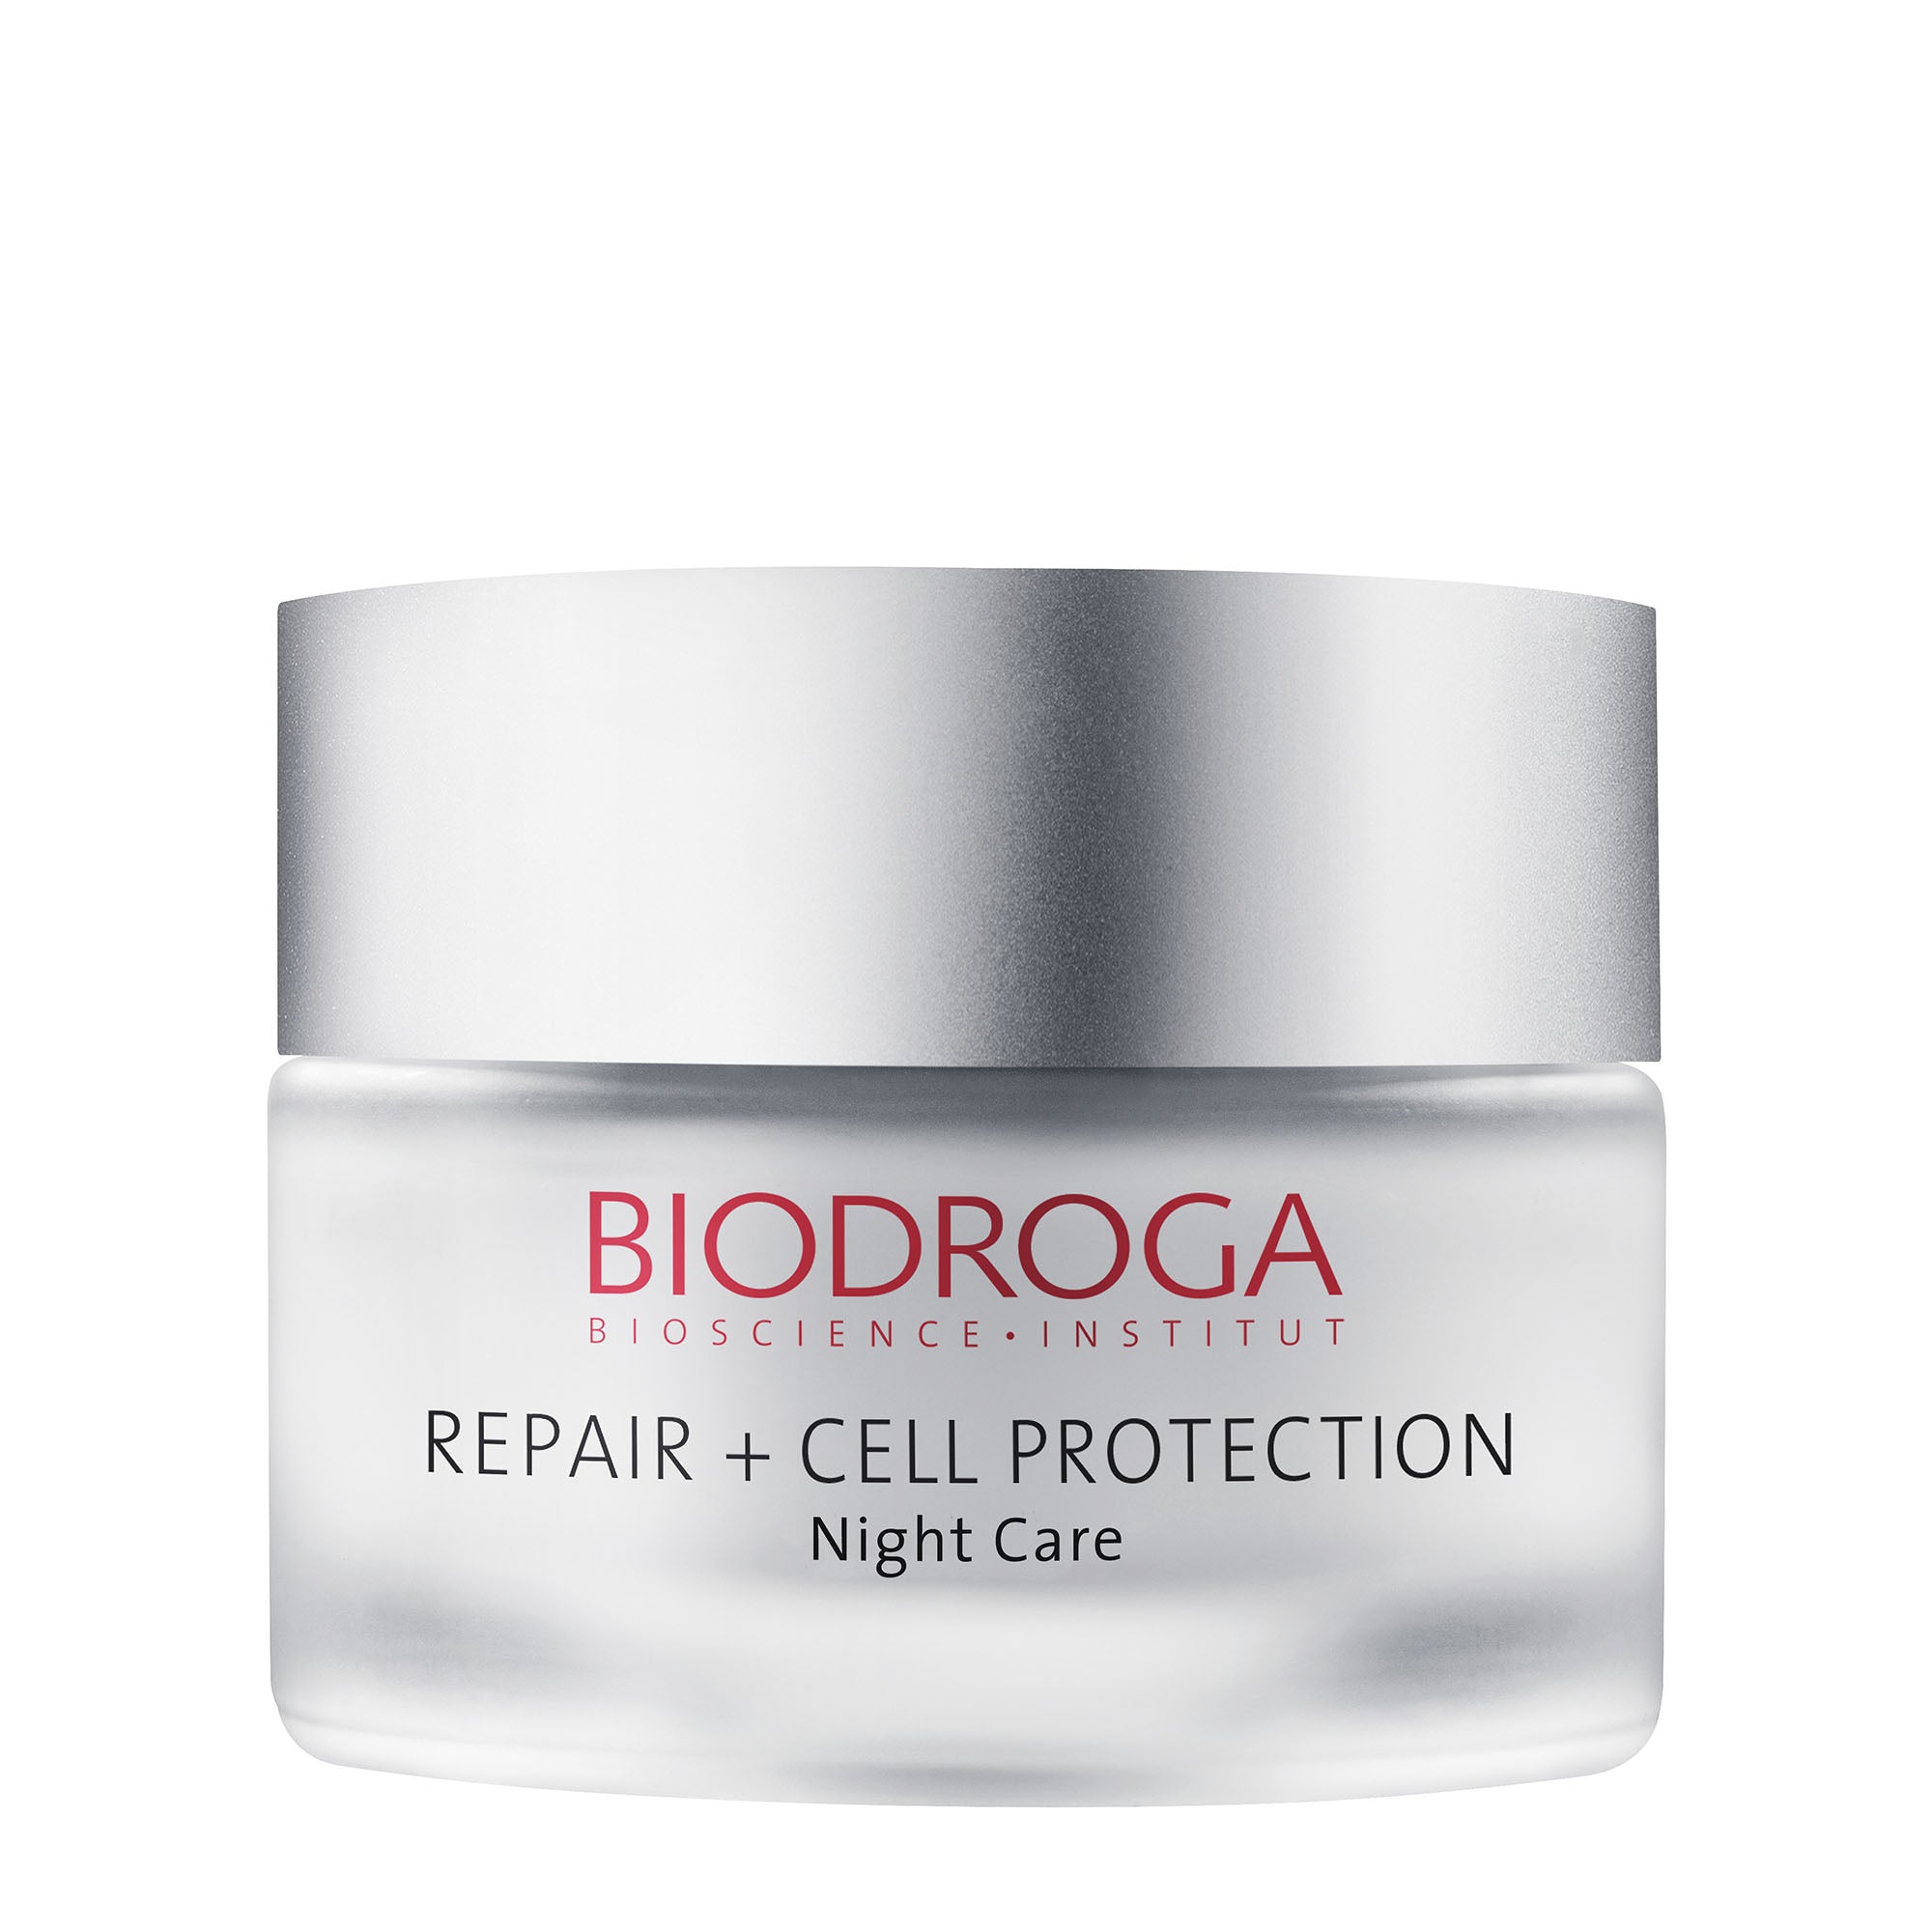 REPAIR + CELL PROTECTION Night Care Moisturiser - BIODROGA - True Beauty Skin & Body Care - BIODROGA Australia